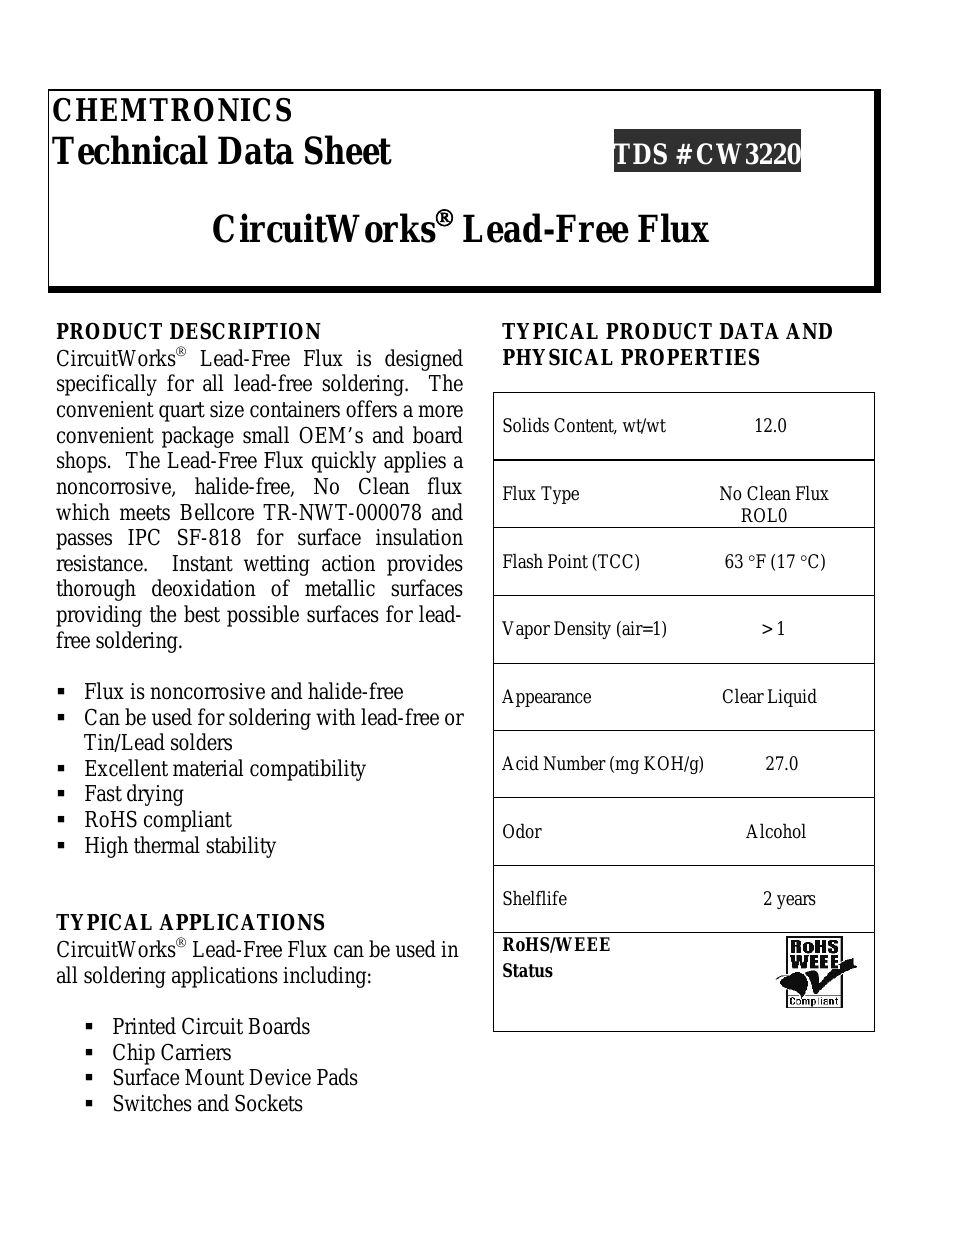 CircuitWorks® Lead-Free Flux CW3220